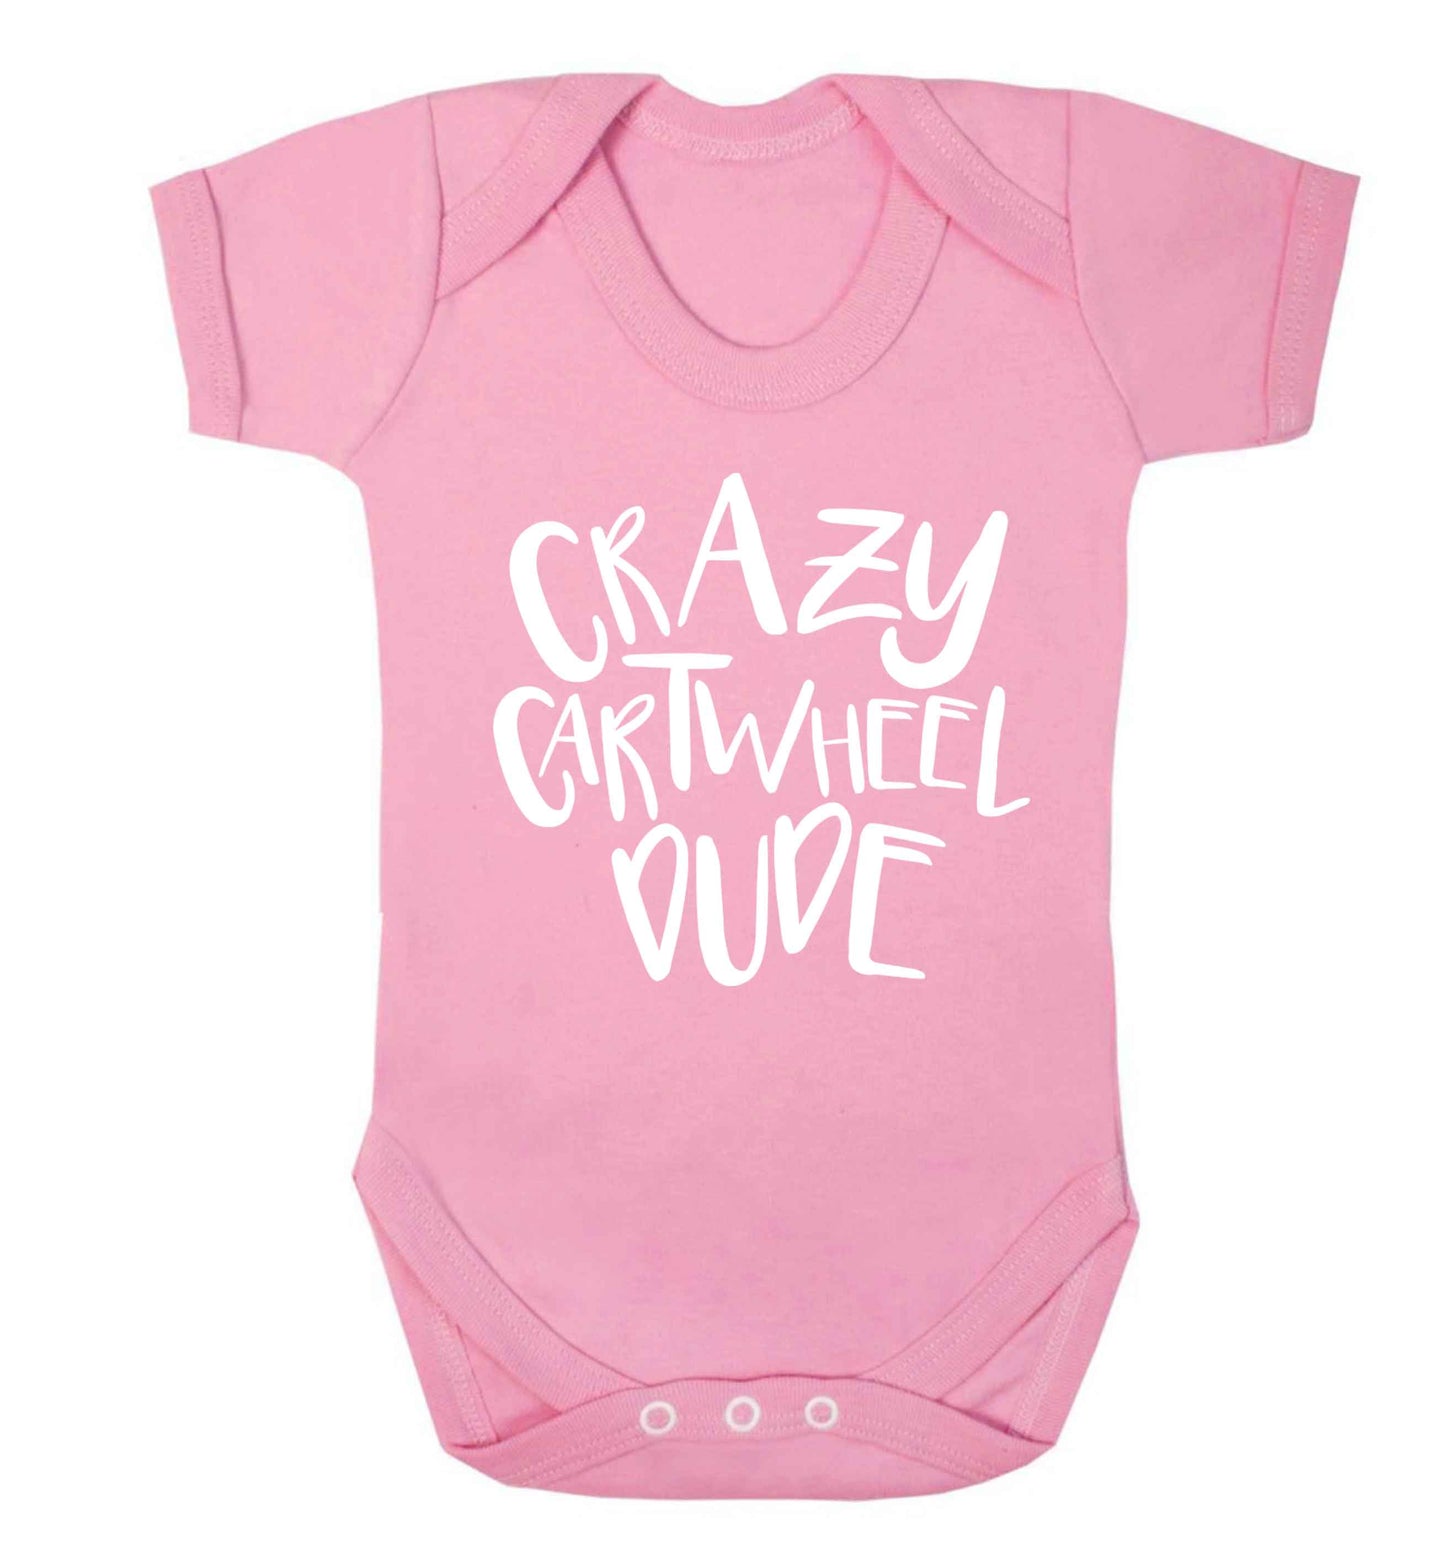 Crazy cartwheel dude Baby Vest pale pink 18-24 months